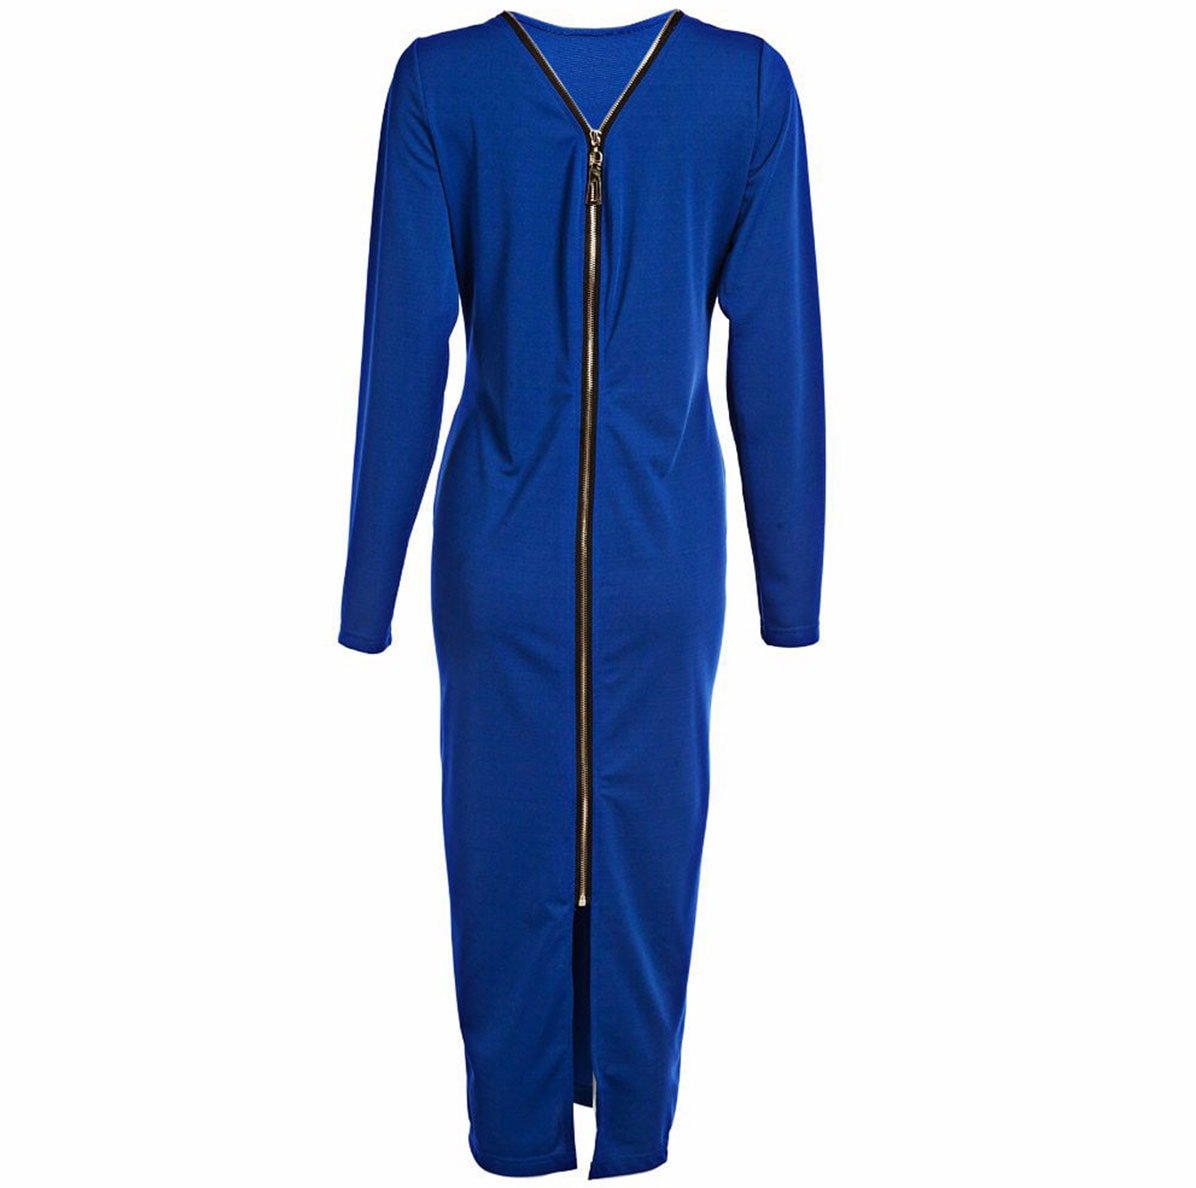 M0185 blue8 Office Evening Dresses maureens.com boutique